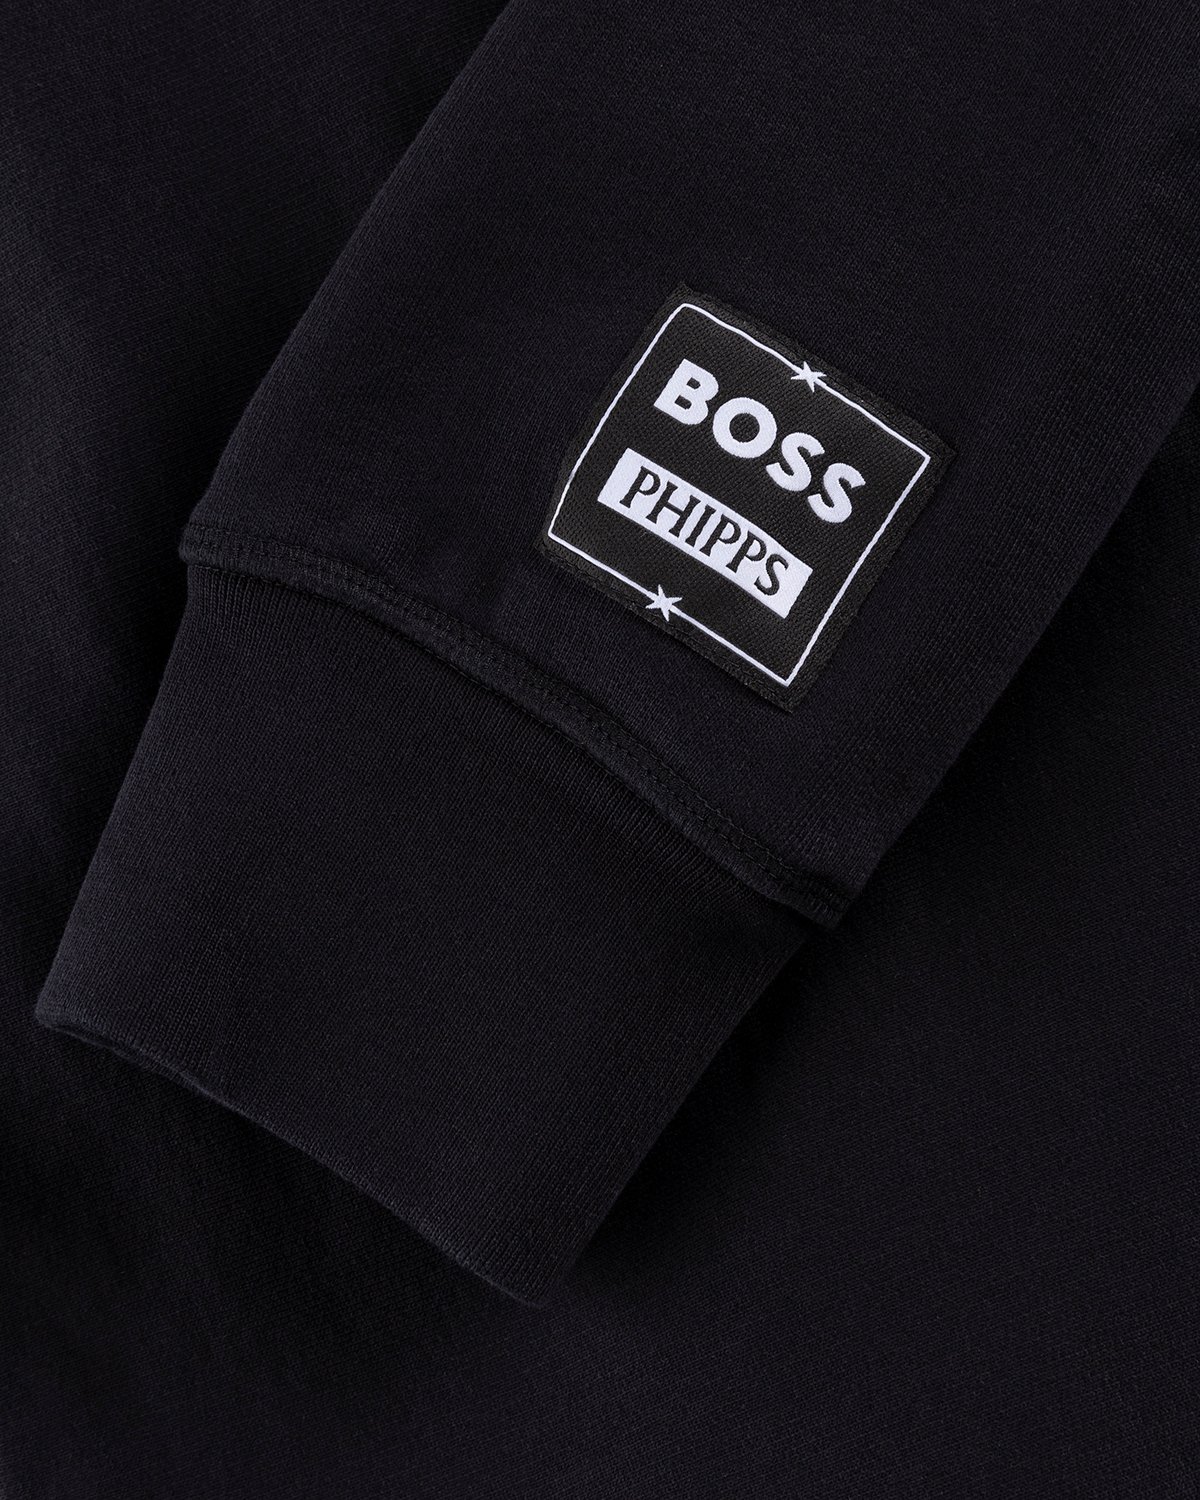 BOSS x Phipps - Co-Branded Organic Cotton Sweatshirt Black - Clothing - Black - Image 3